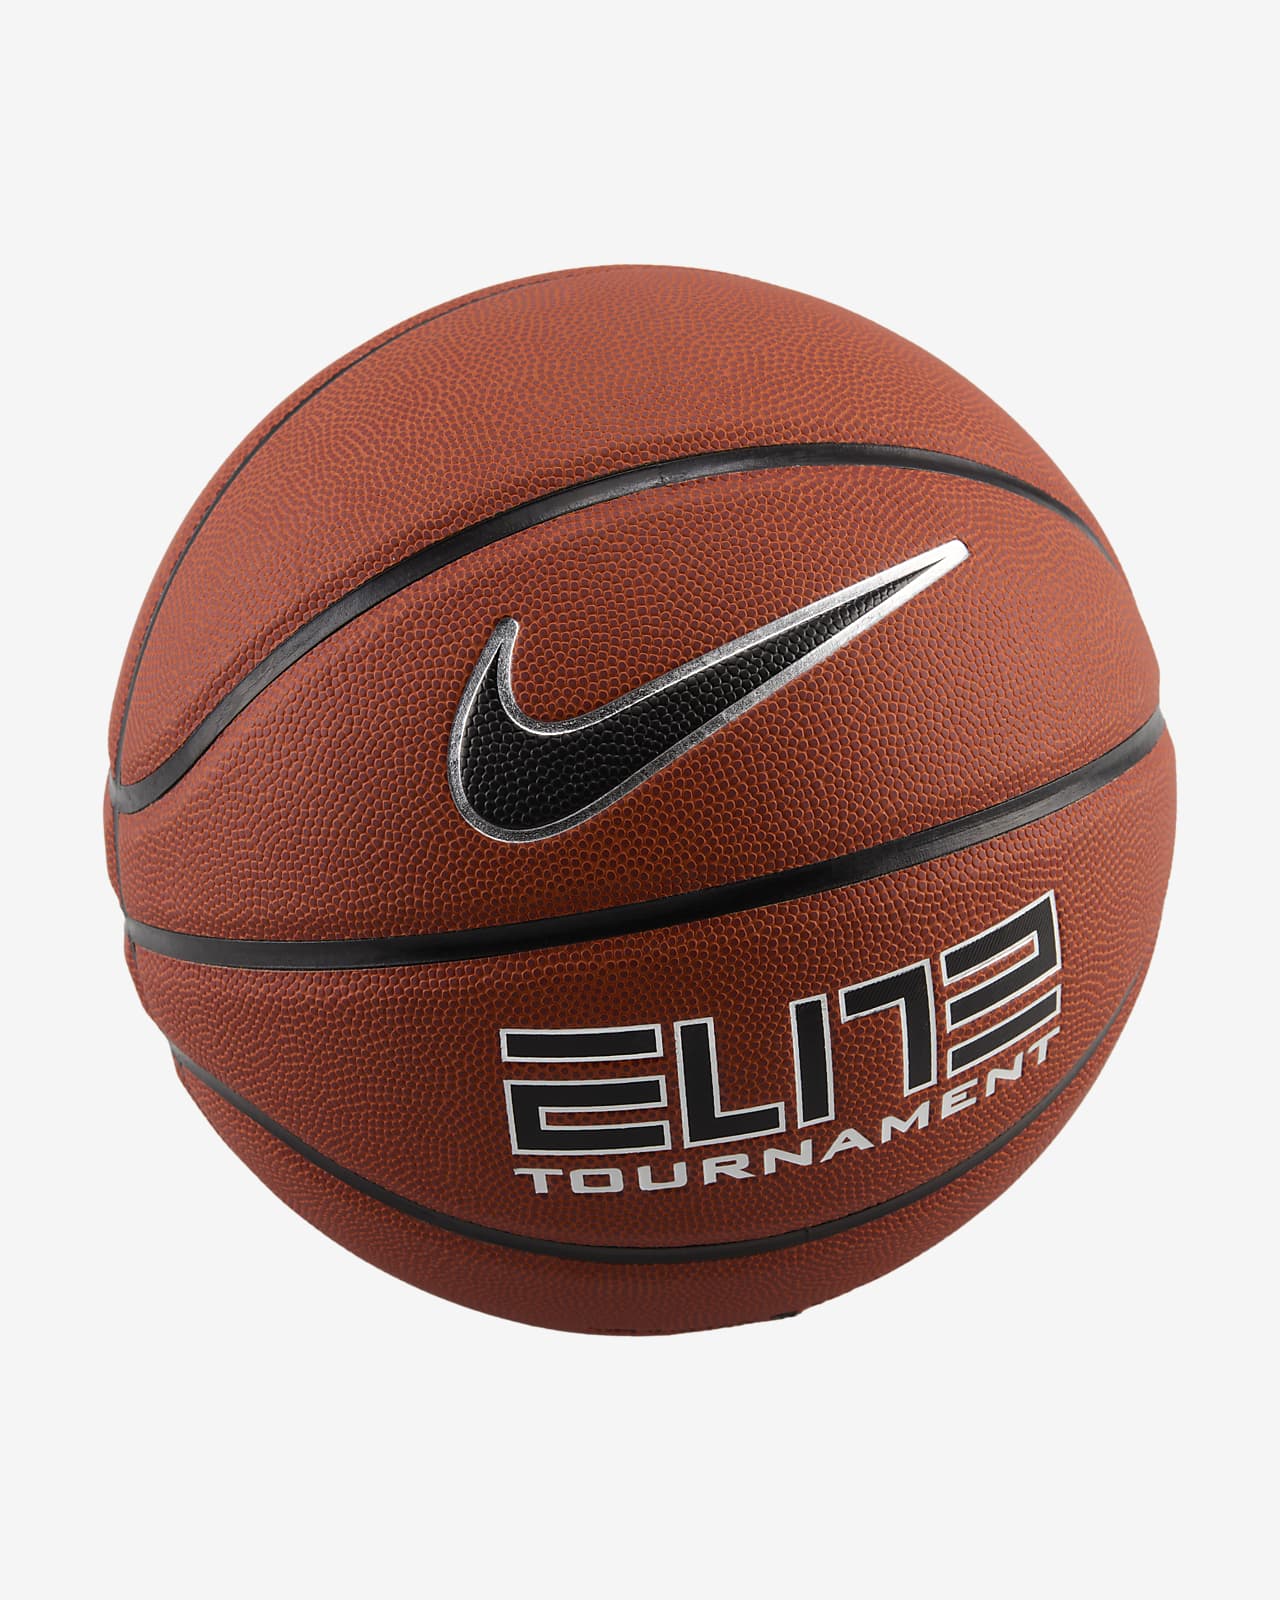 Nike Elite Tournament 8-Panel basketbal (zonder lucht)